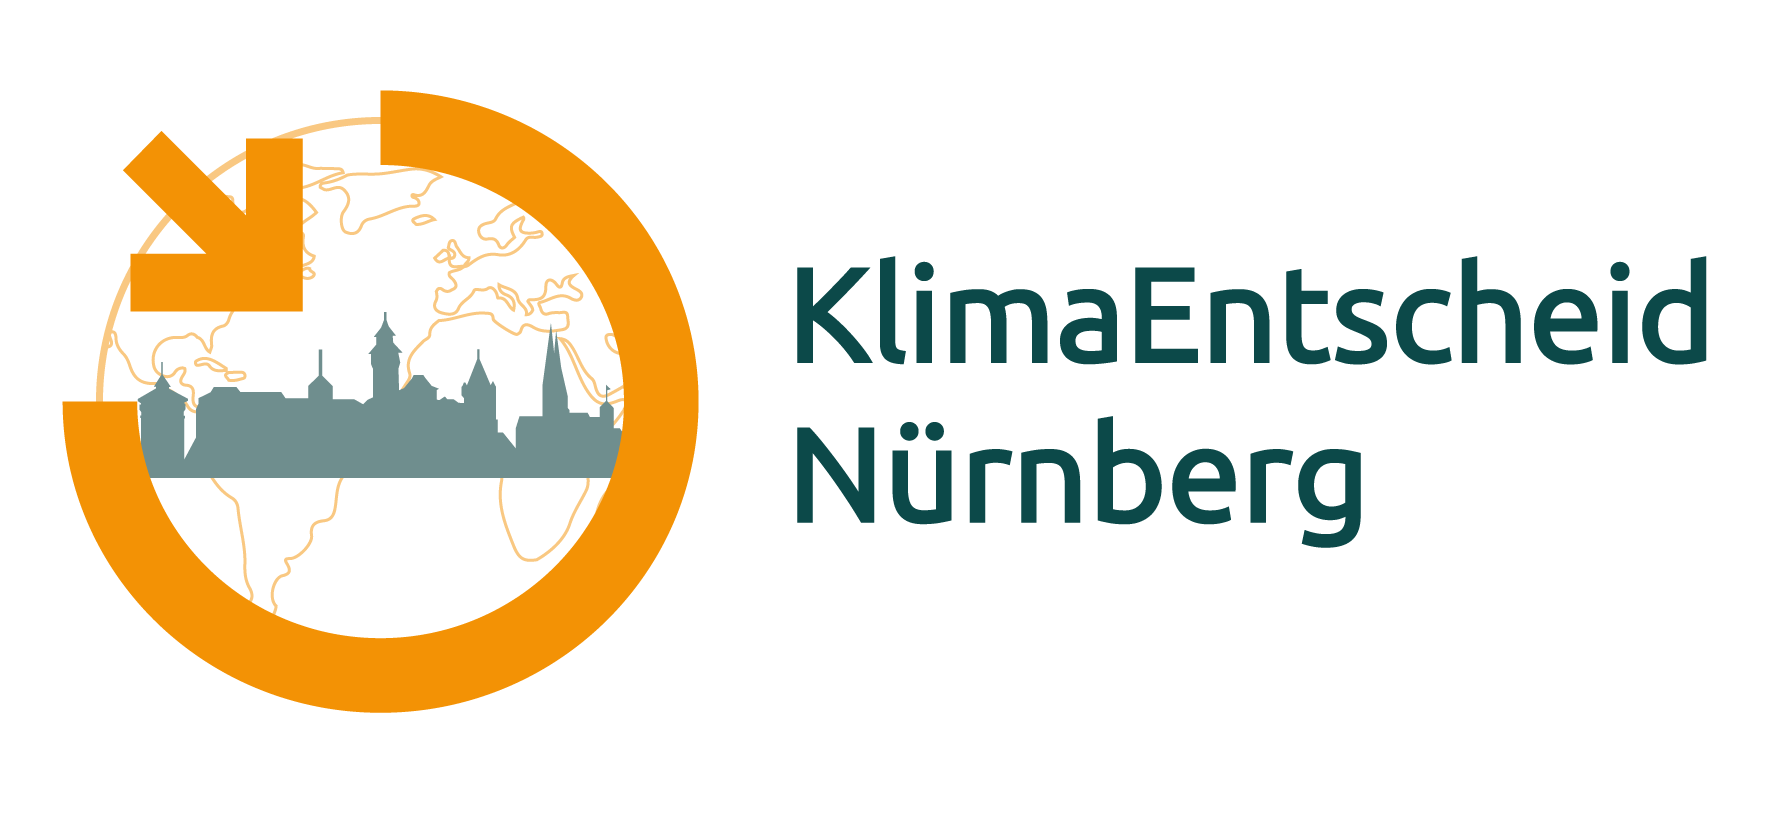 KlimaEntscheid Nürnberg logo